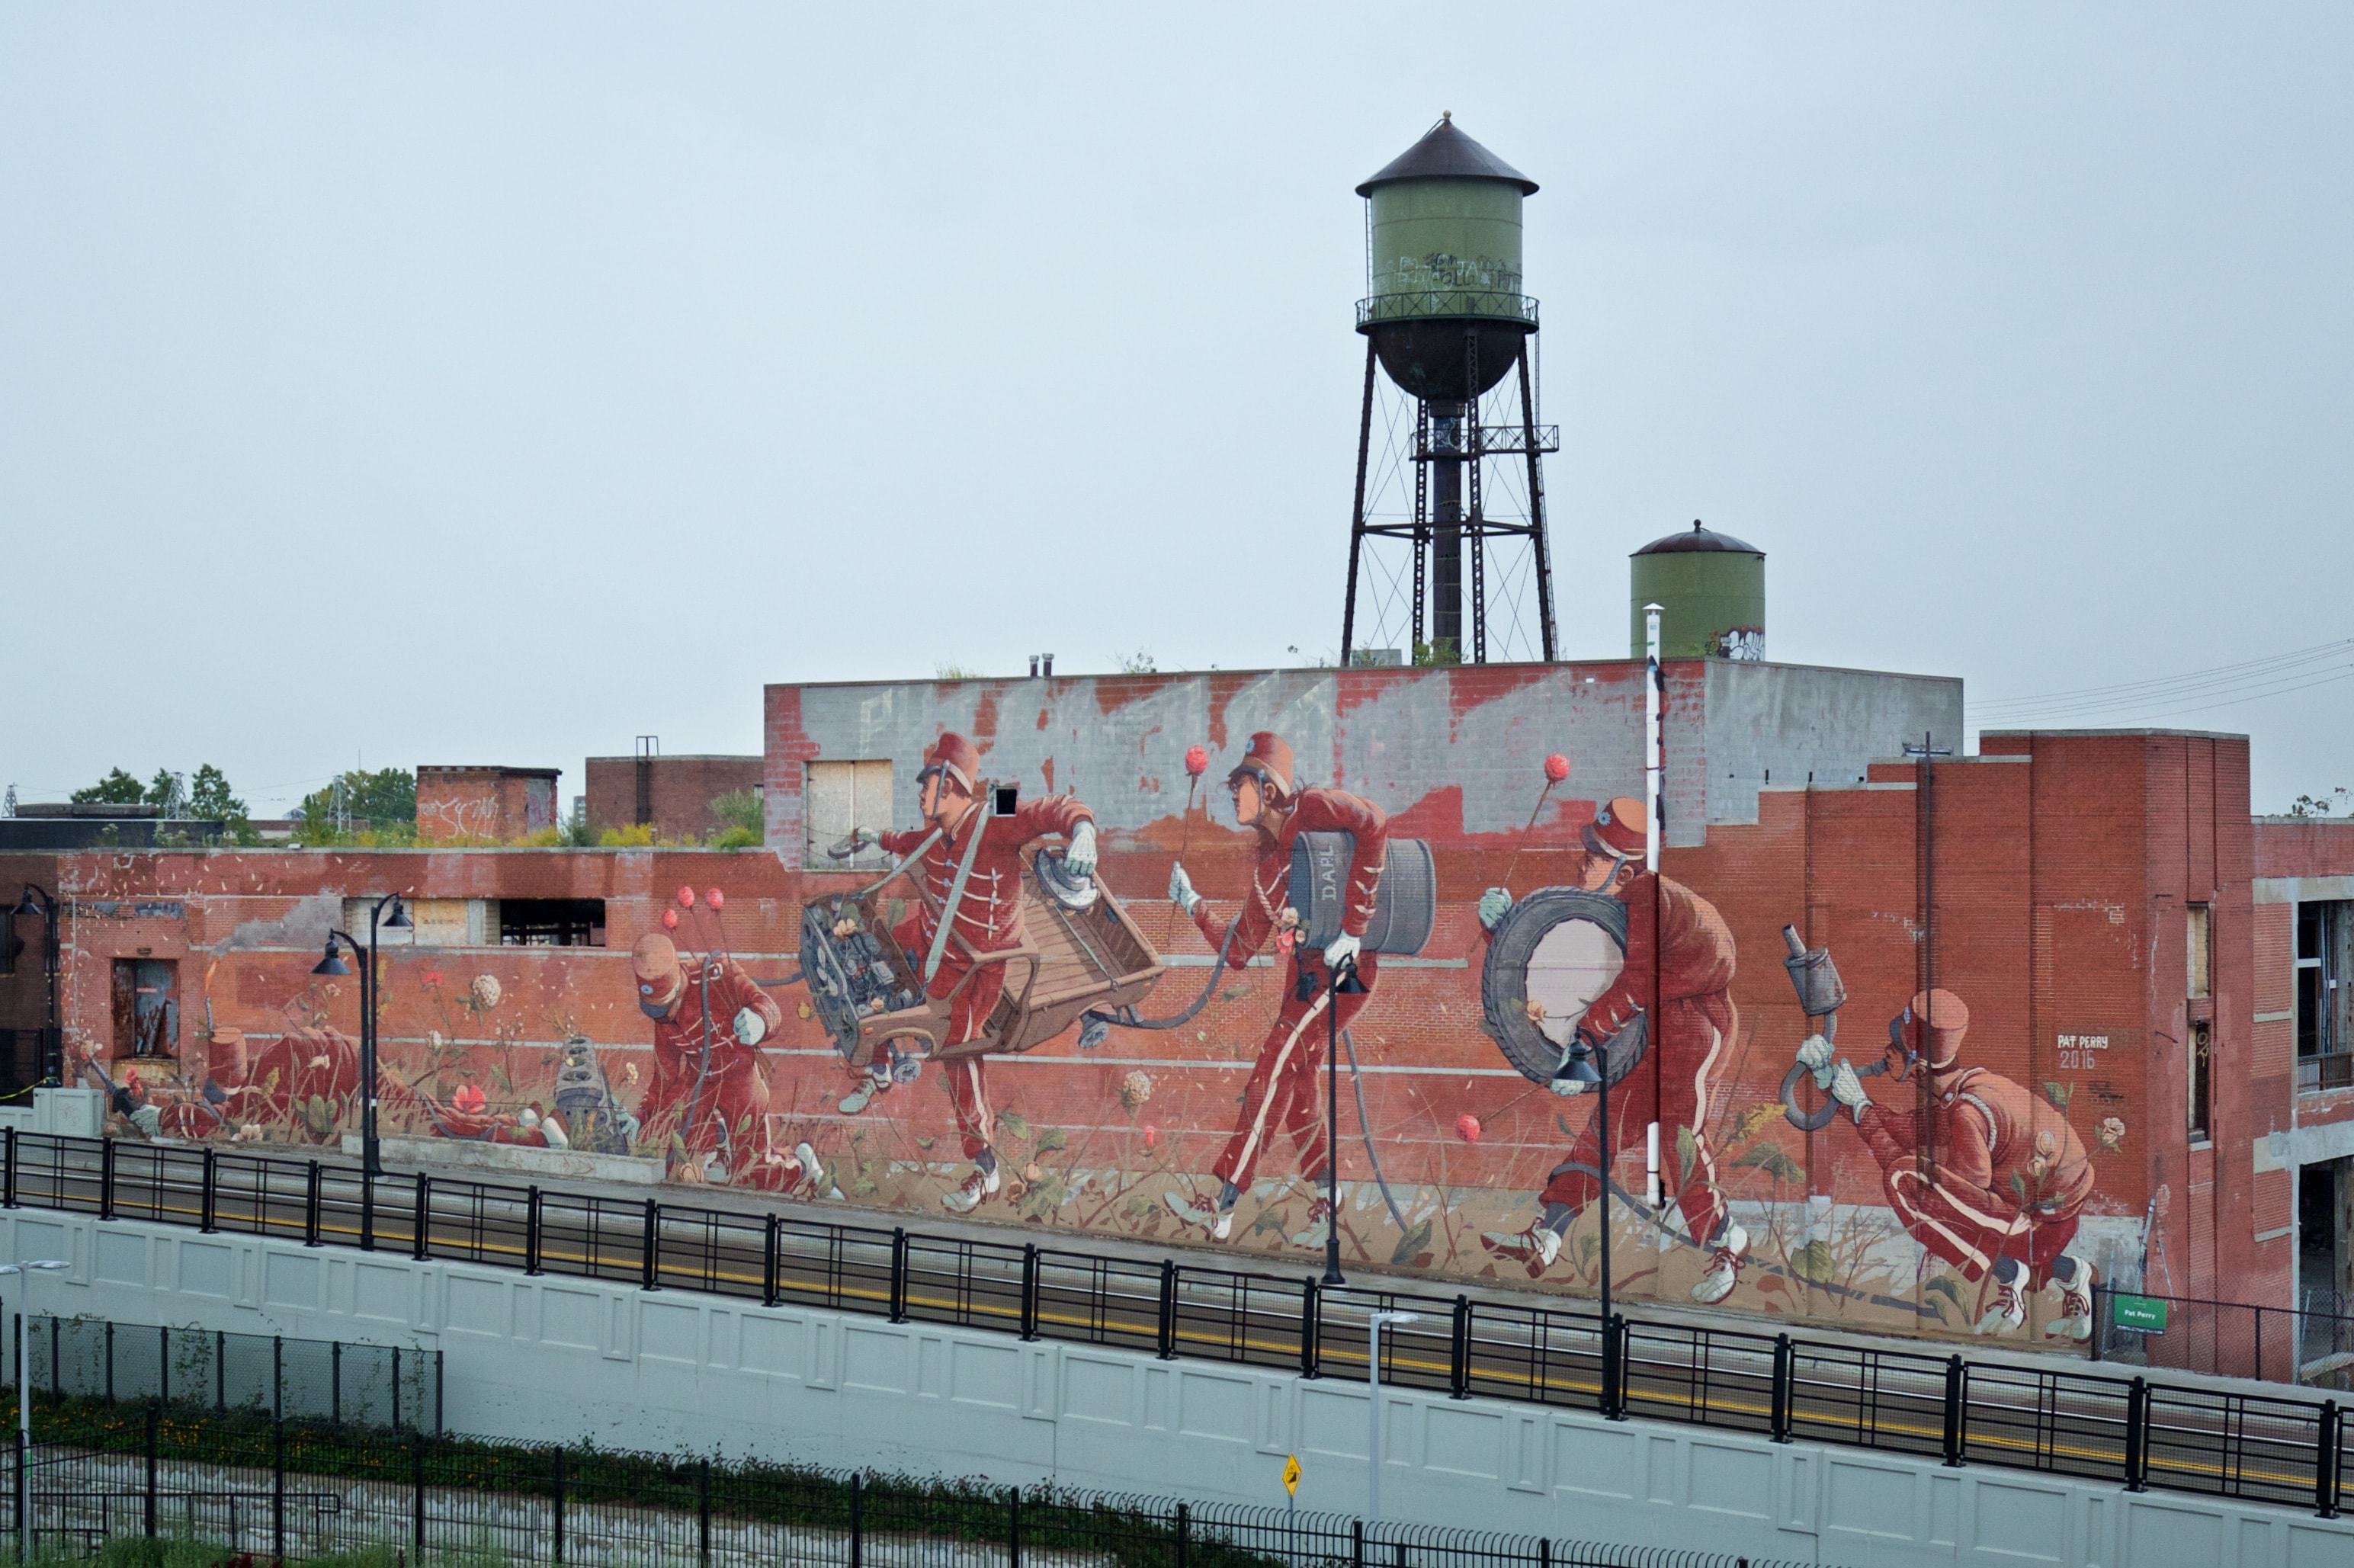 Detroit Mural in the Market 2016